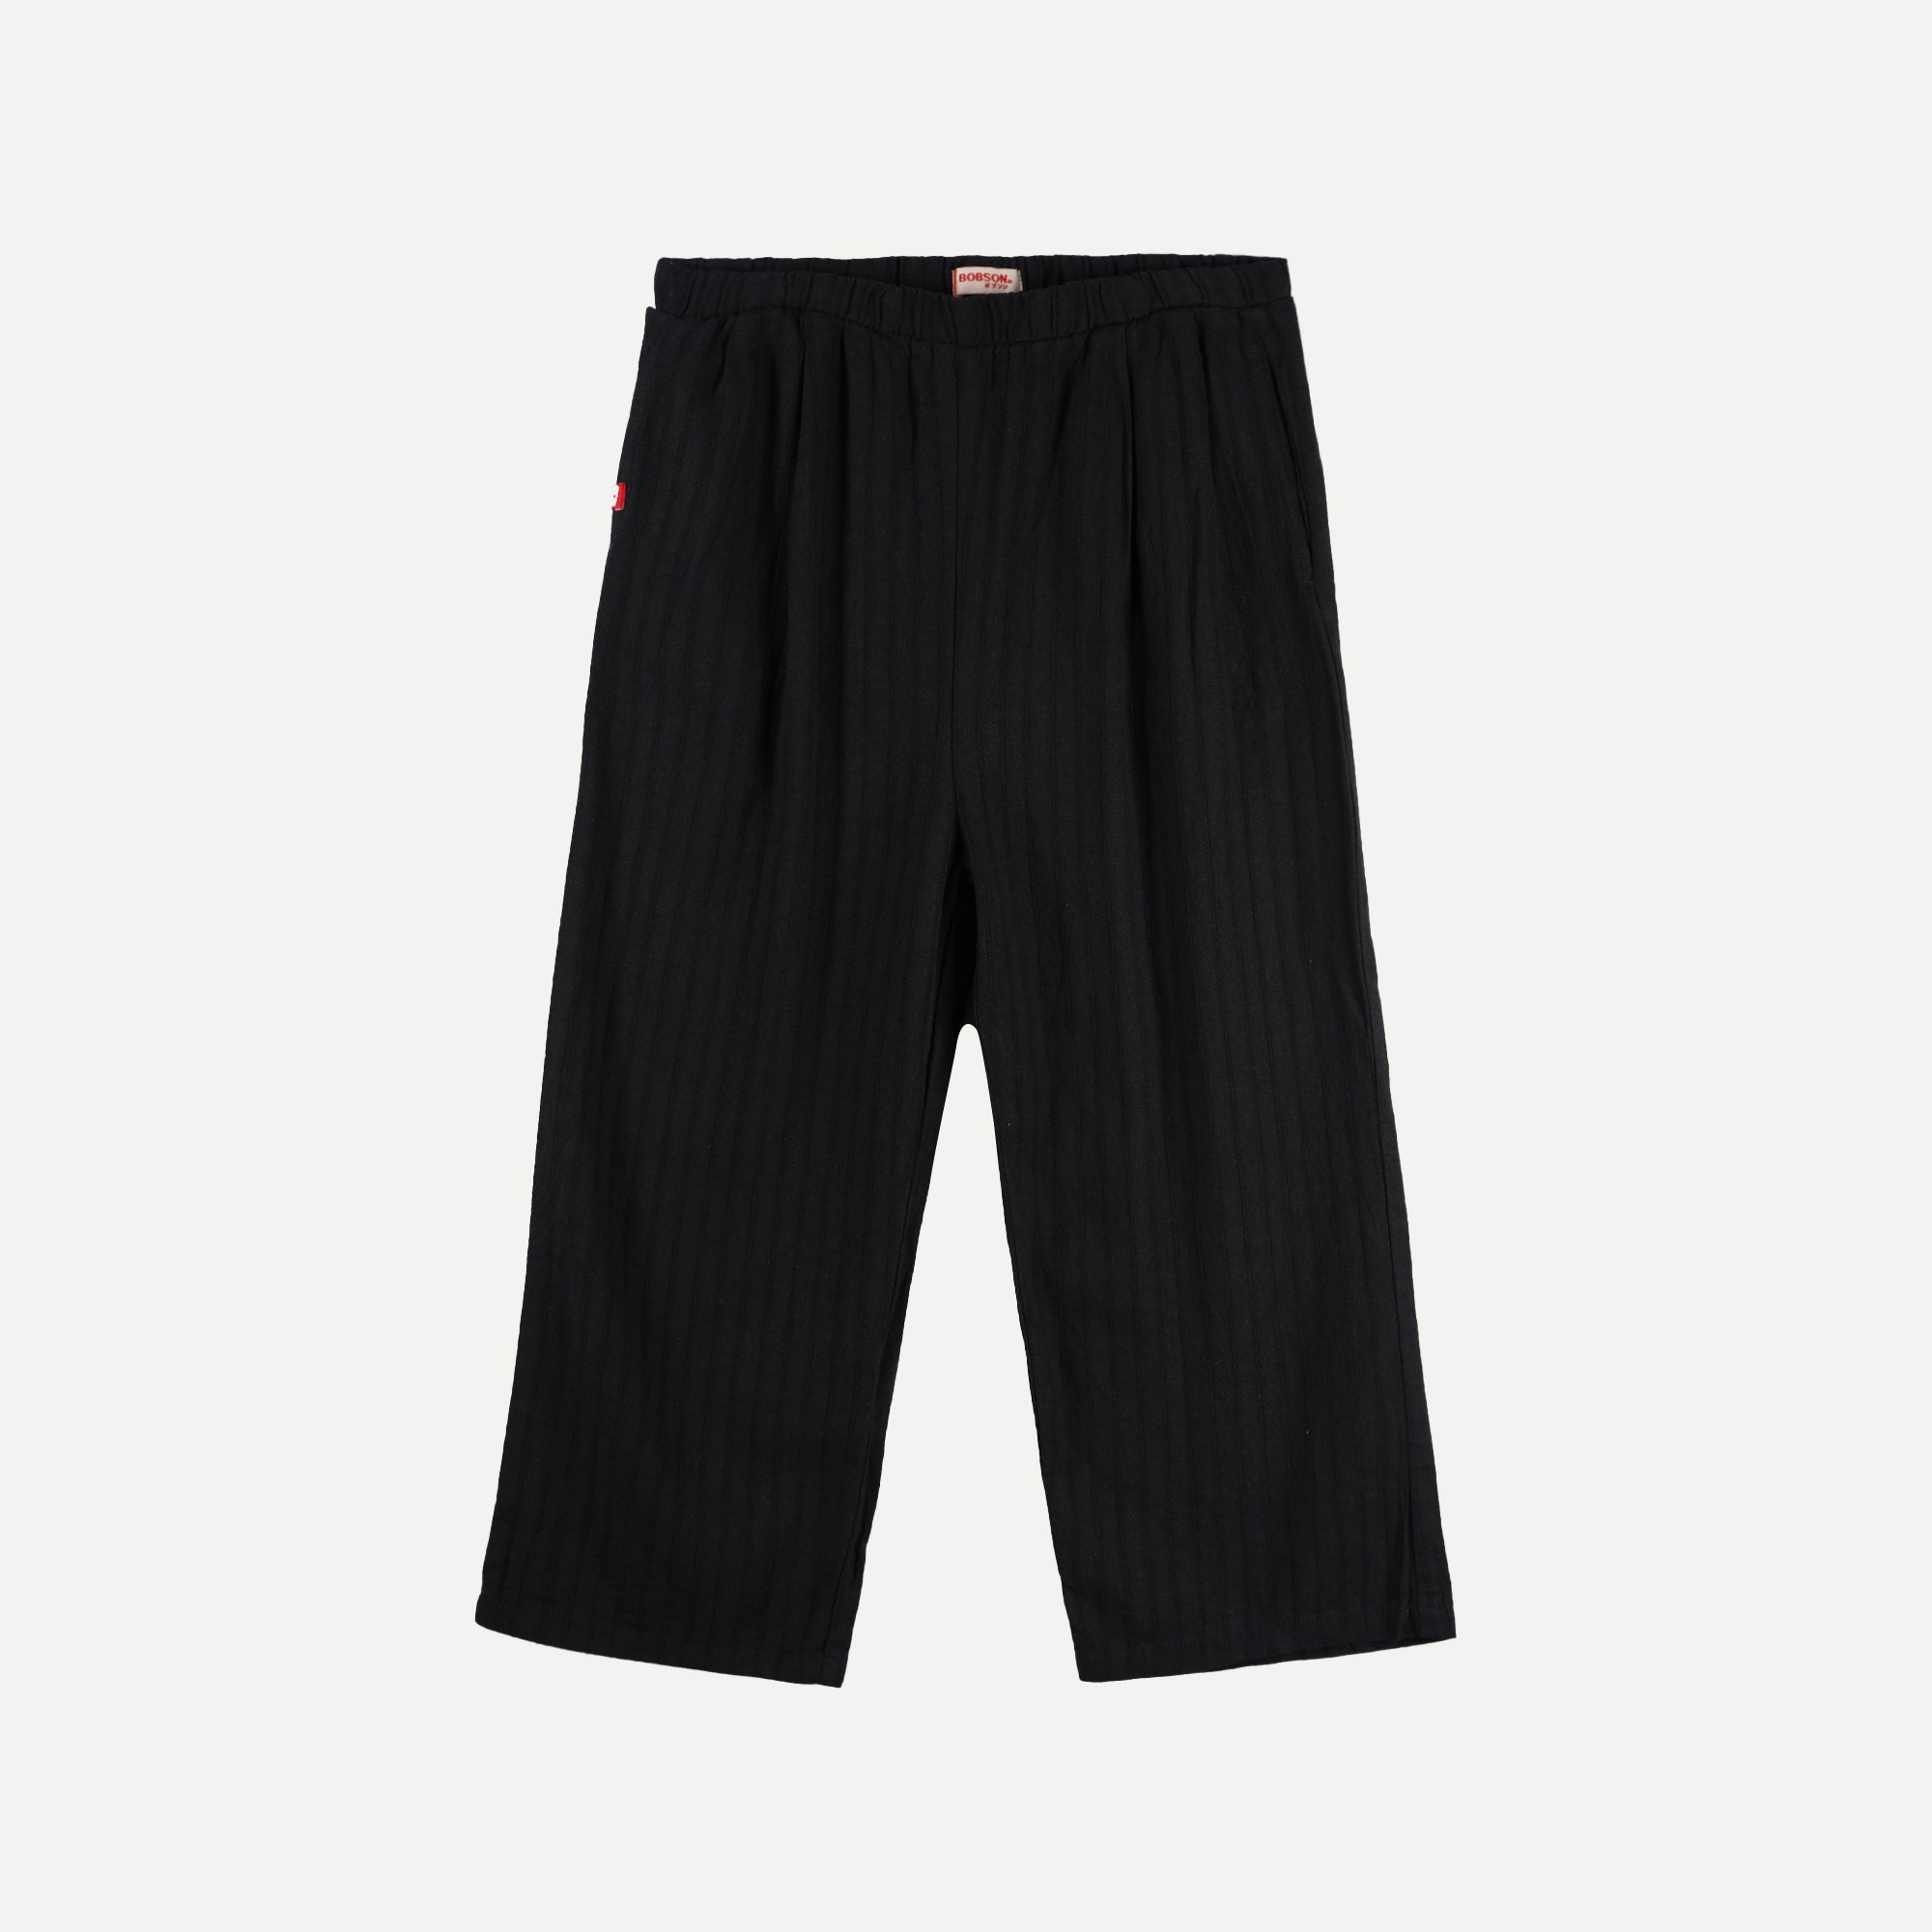 Bobson Japanese Ladies Basic Non-Denim Drawstring Pants for Women Trendy Fashion High Quality Apparel Comfortable Casual Pants for Women 138723-U (Black)